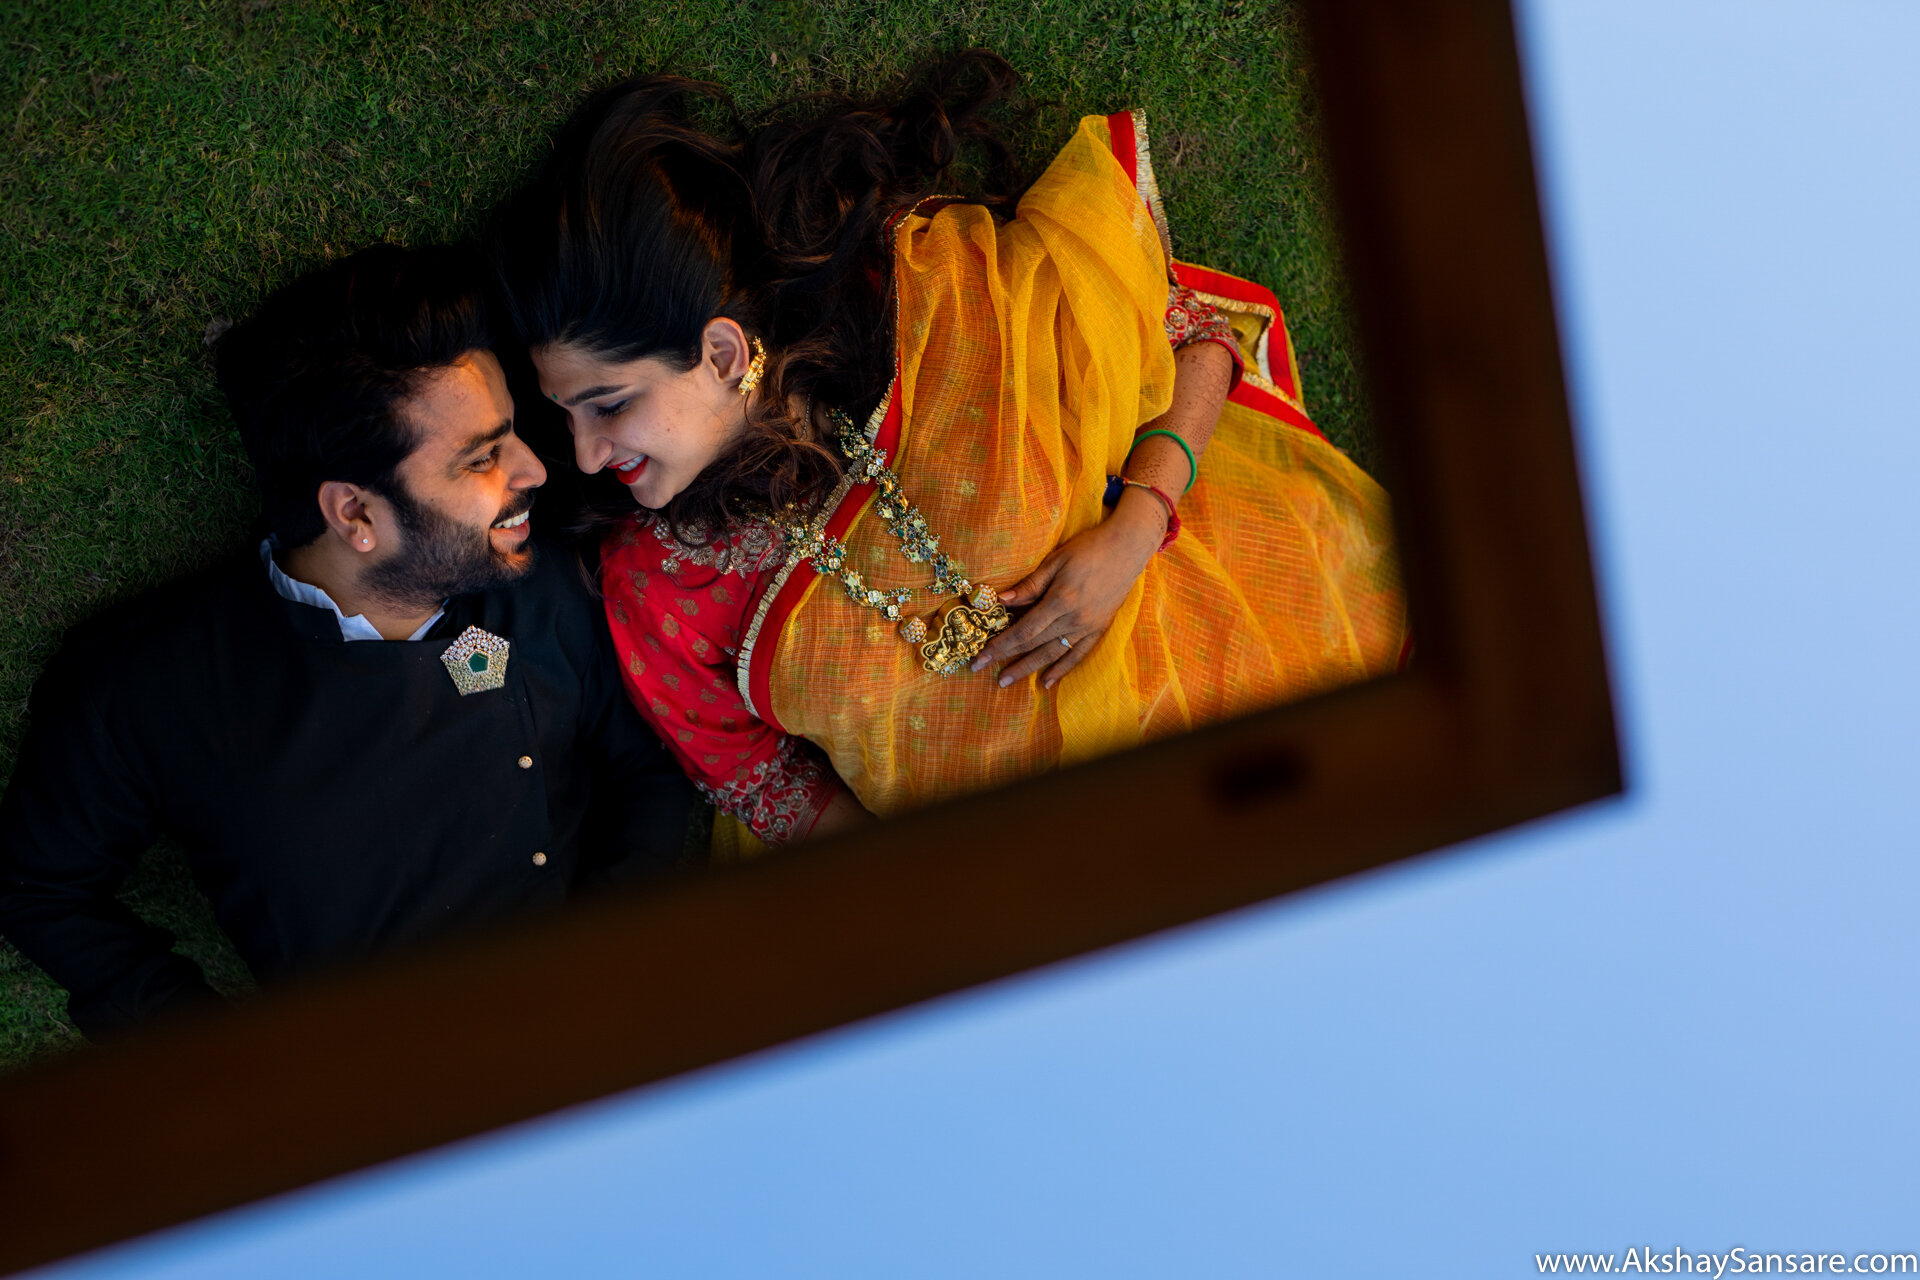 Anuj x Malvika + 1 Akshay Sansare Photography & Films Candid Photographer Best in mumbai Cinematic wedding films-27.jpg